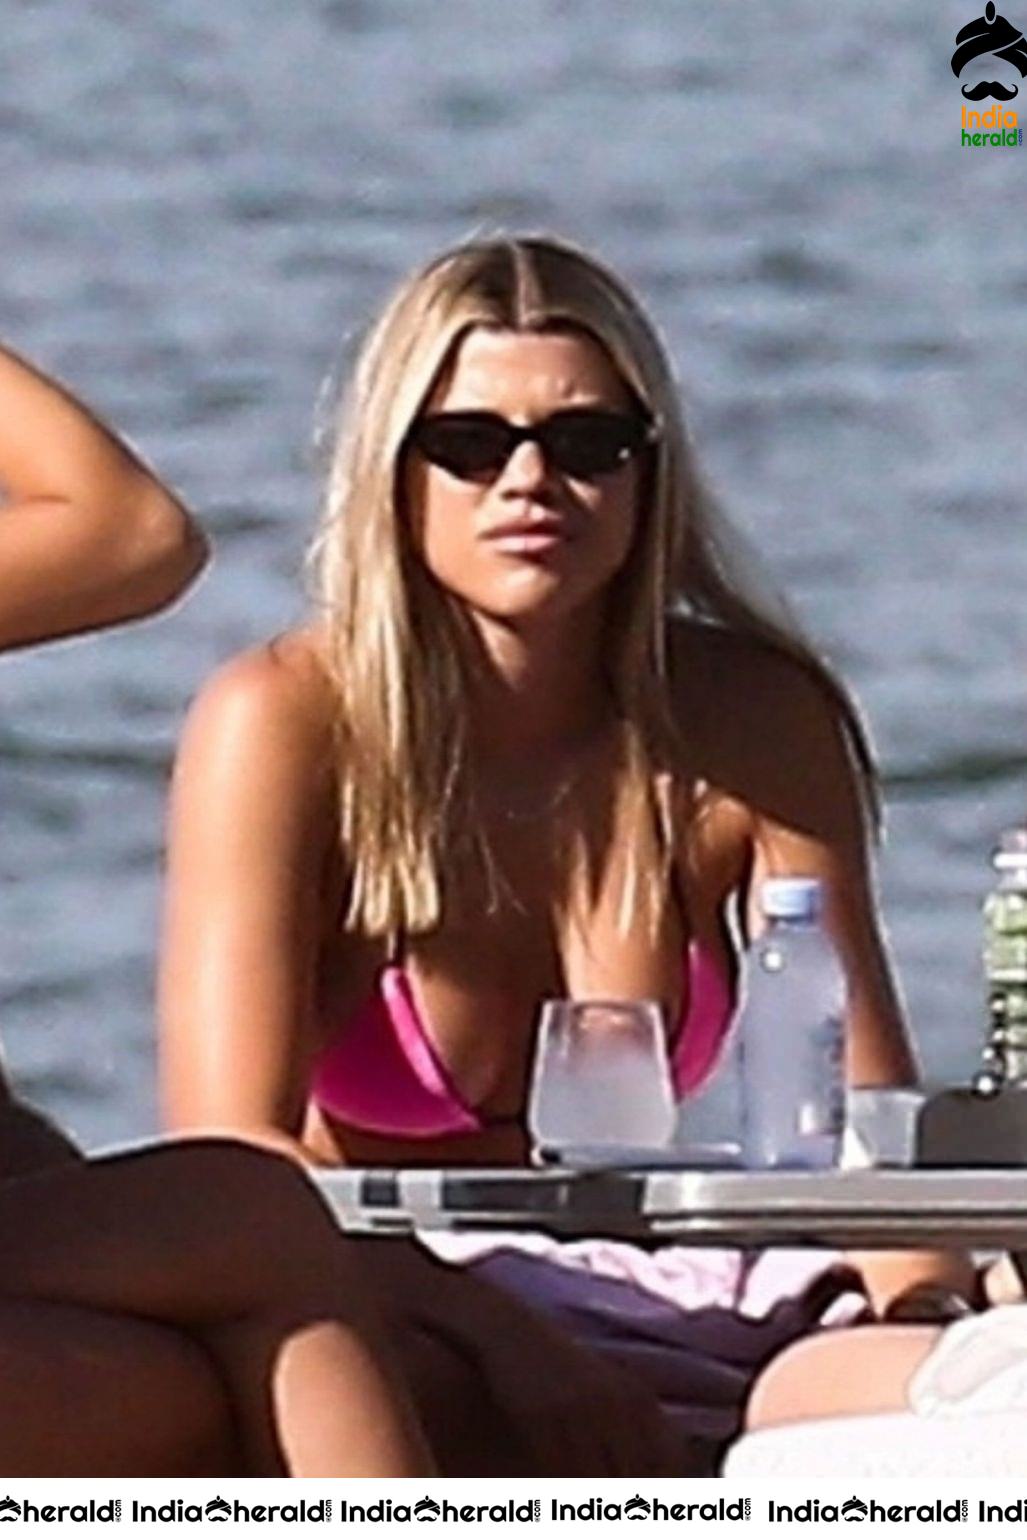 Sofia Richie soaking up the sun in a bikini in Florida